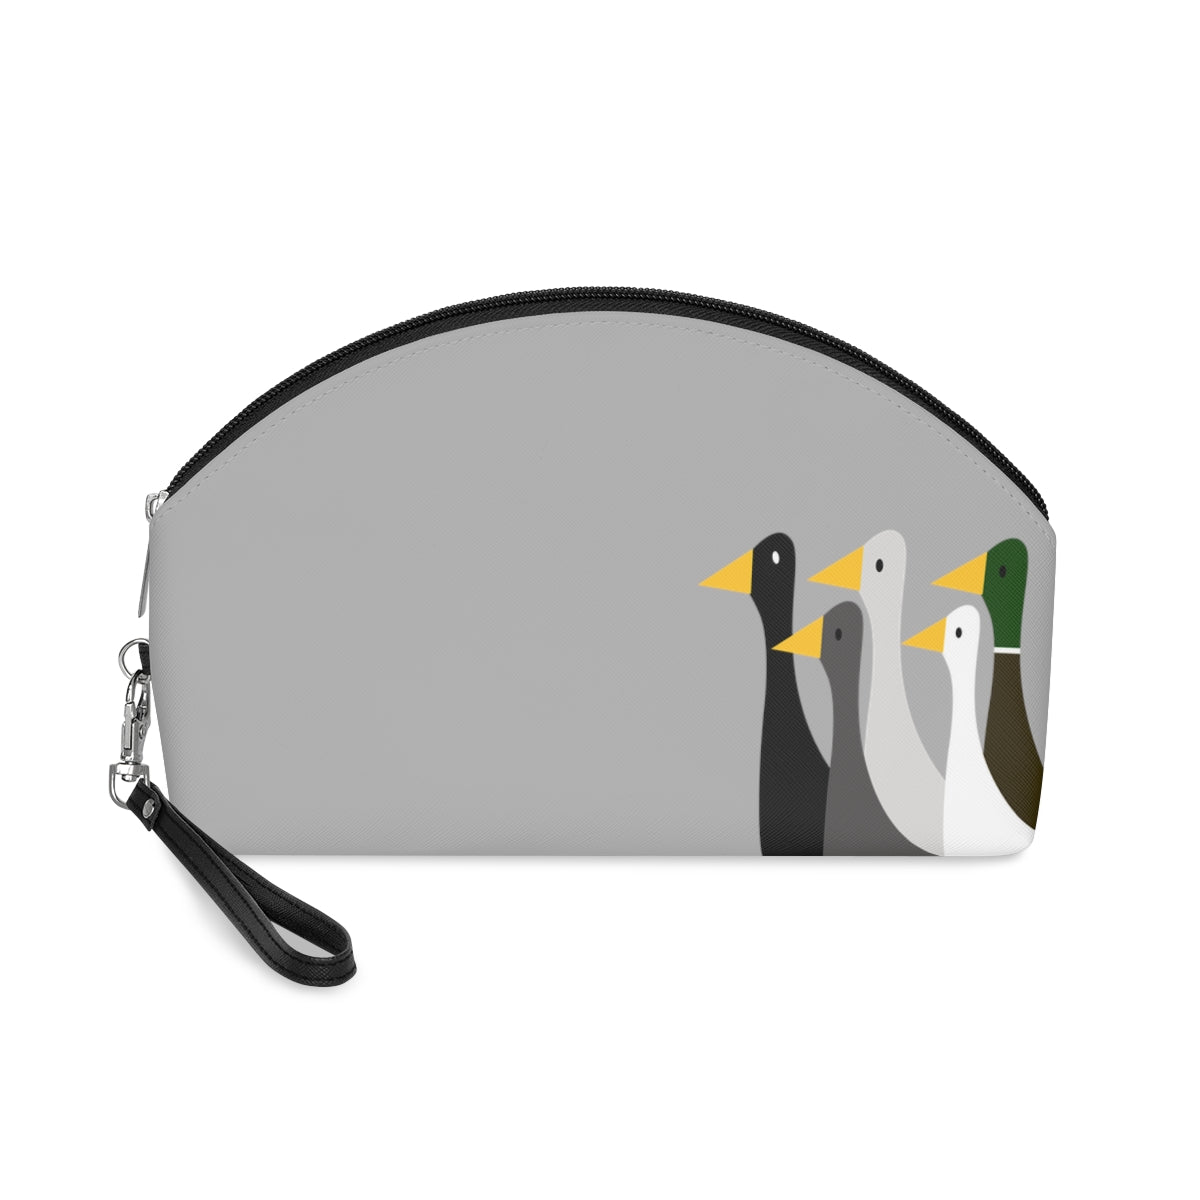 Nifty Ducks Co. Logo2 - light gray - Makeup Bag